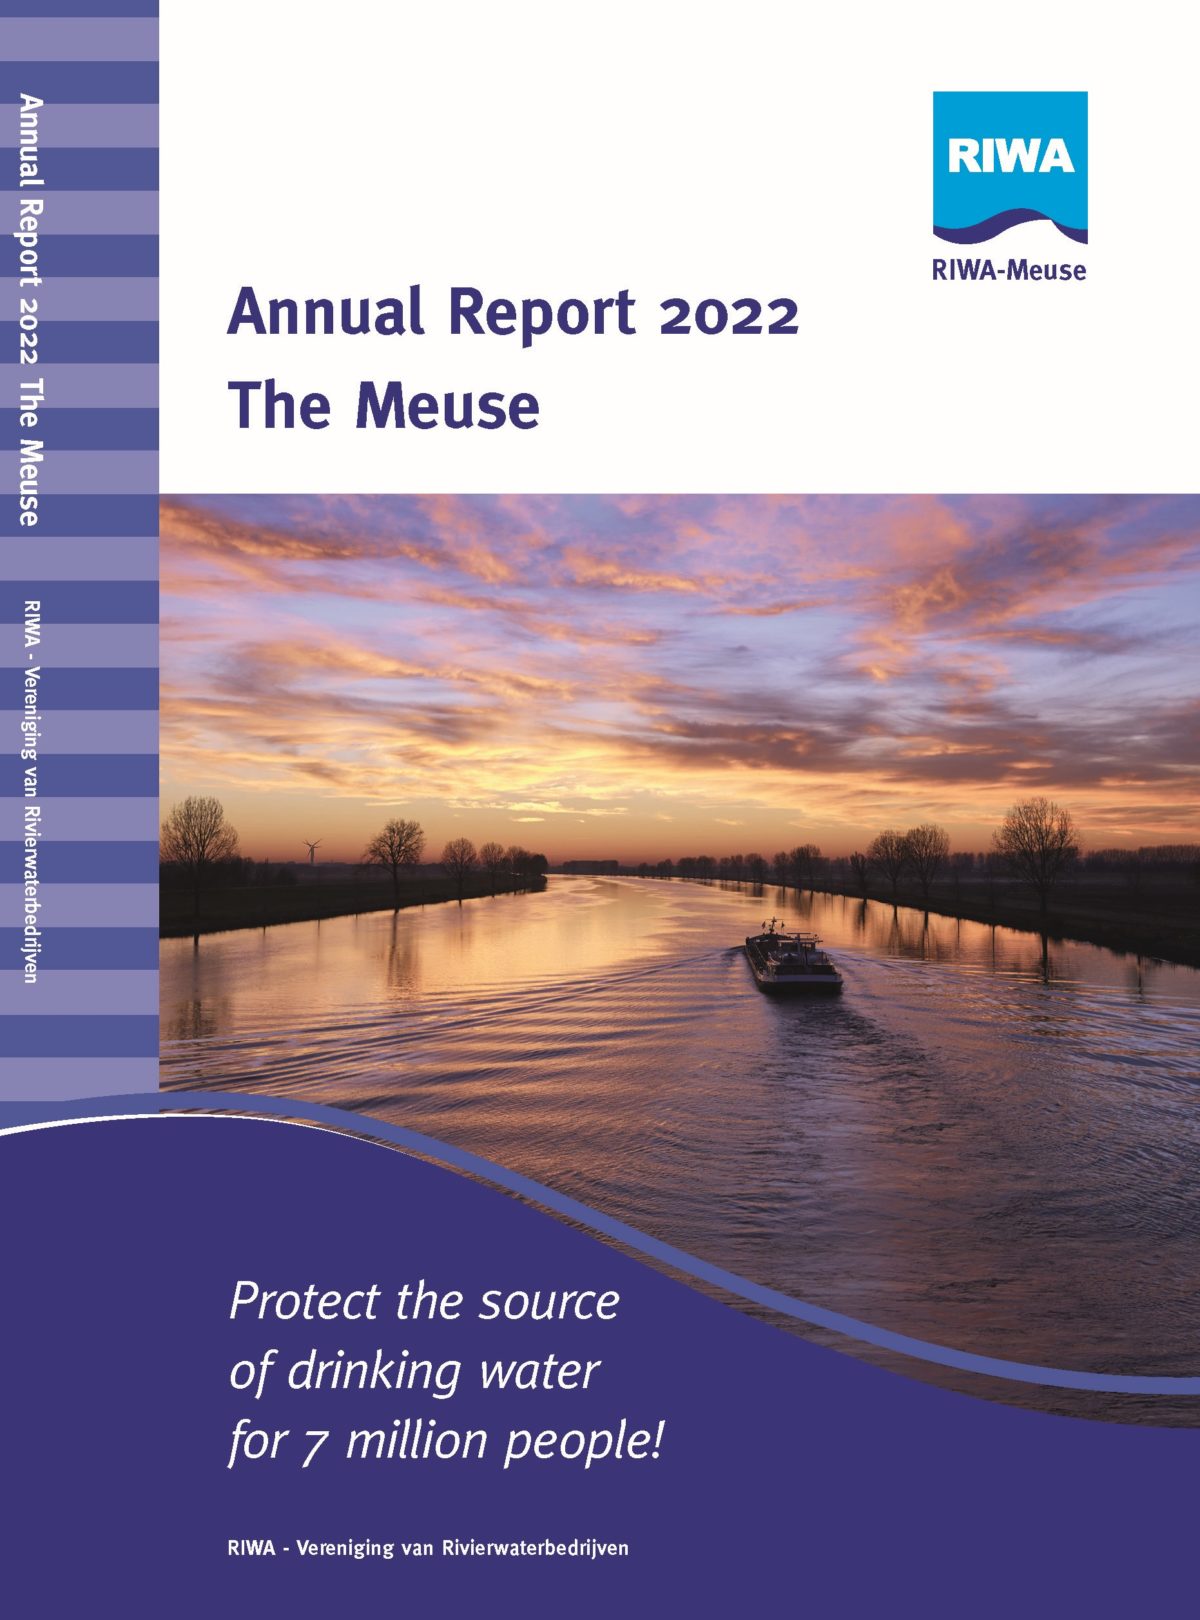 RIWA Annual Report 2022 The Meuse